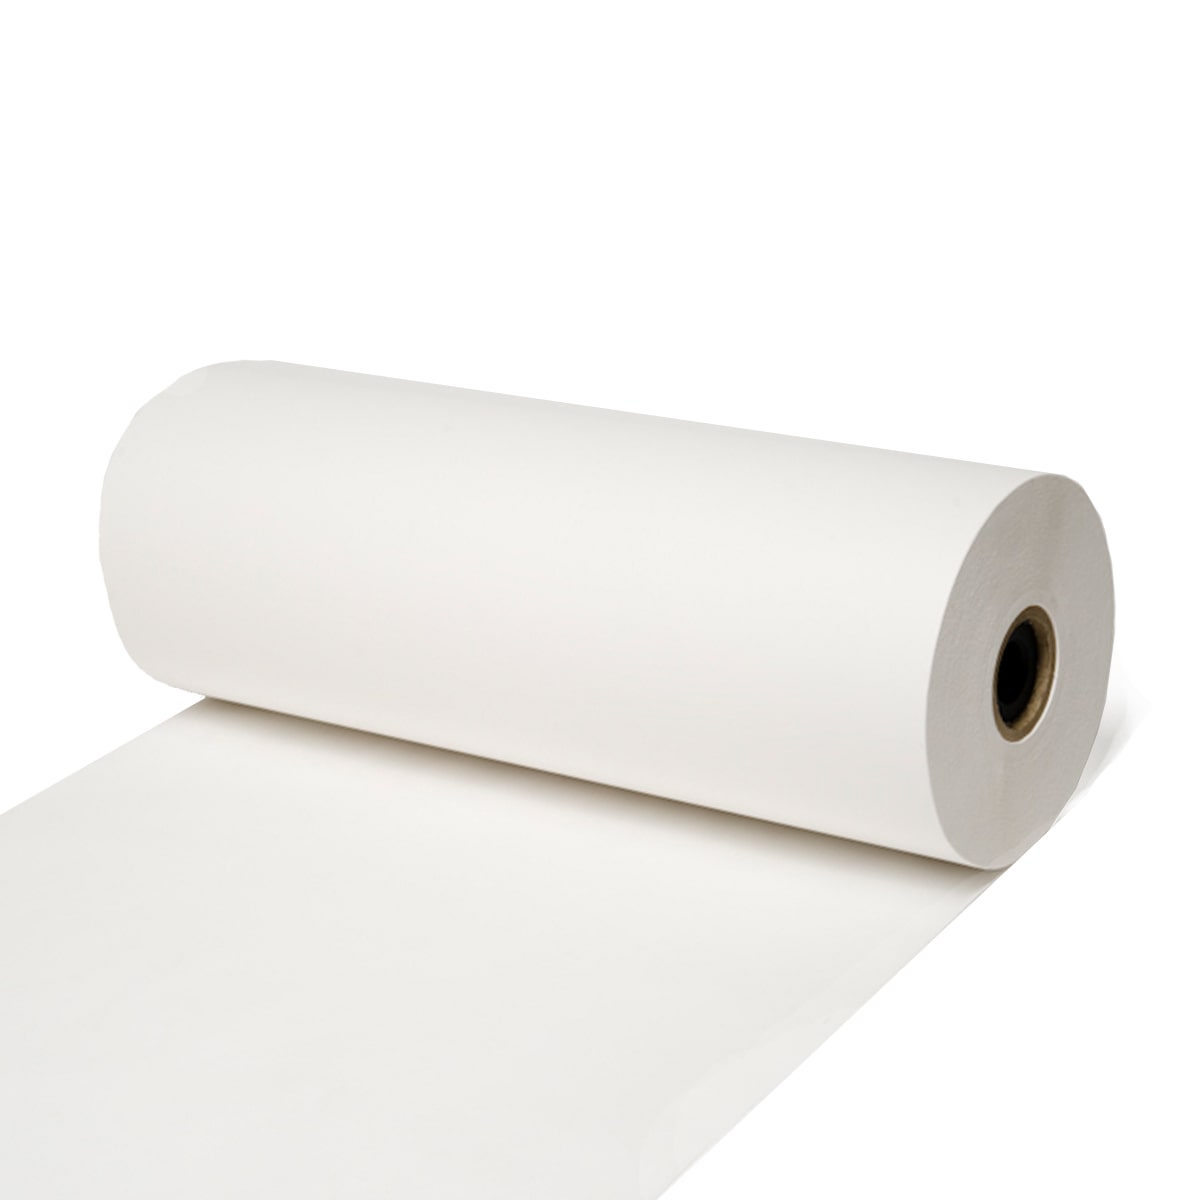 Seidenpapier Weiss, 50 / 75 cm breit, 500 Meter / Rolle